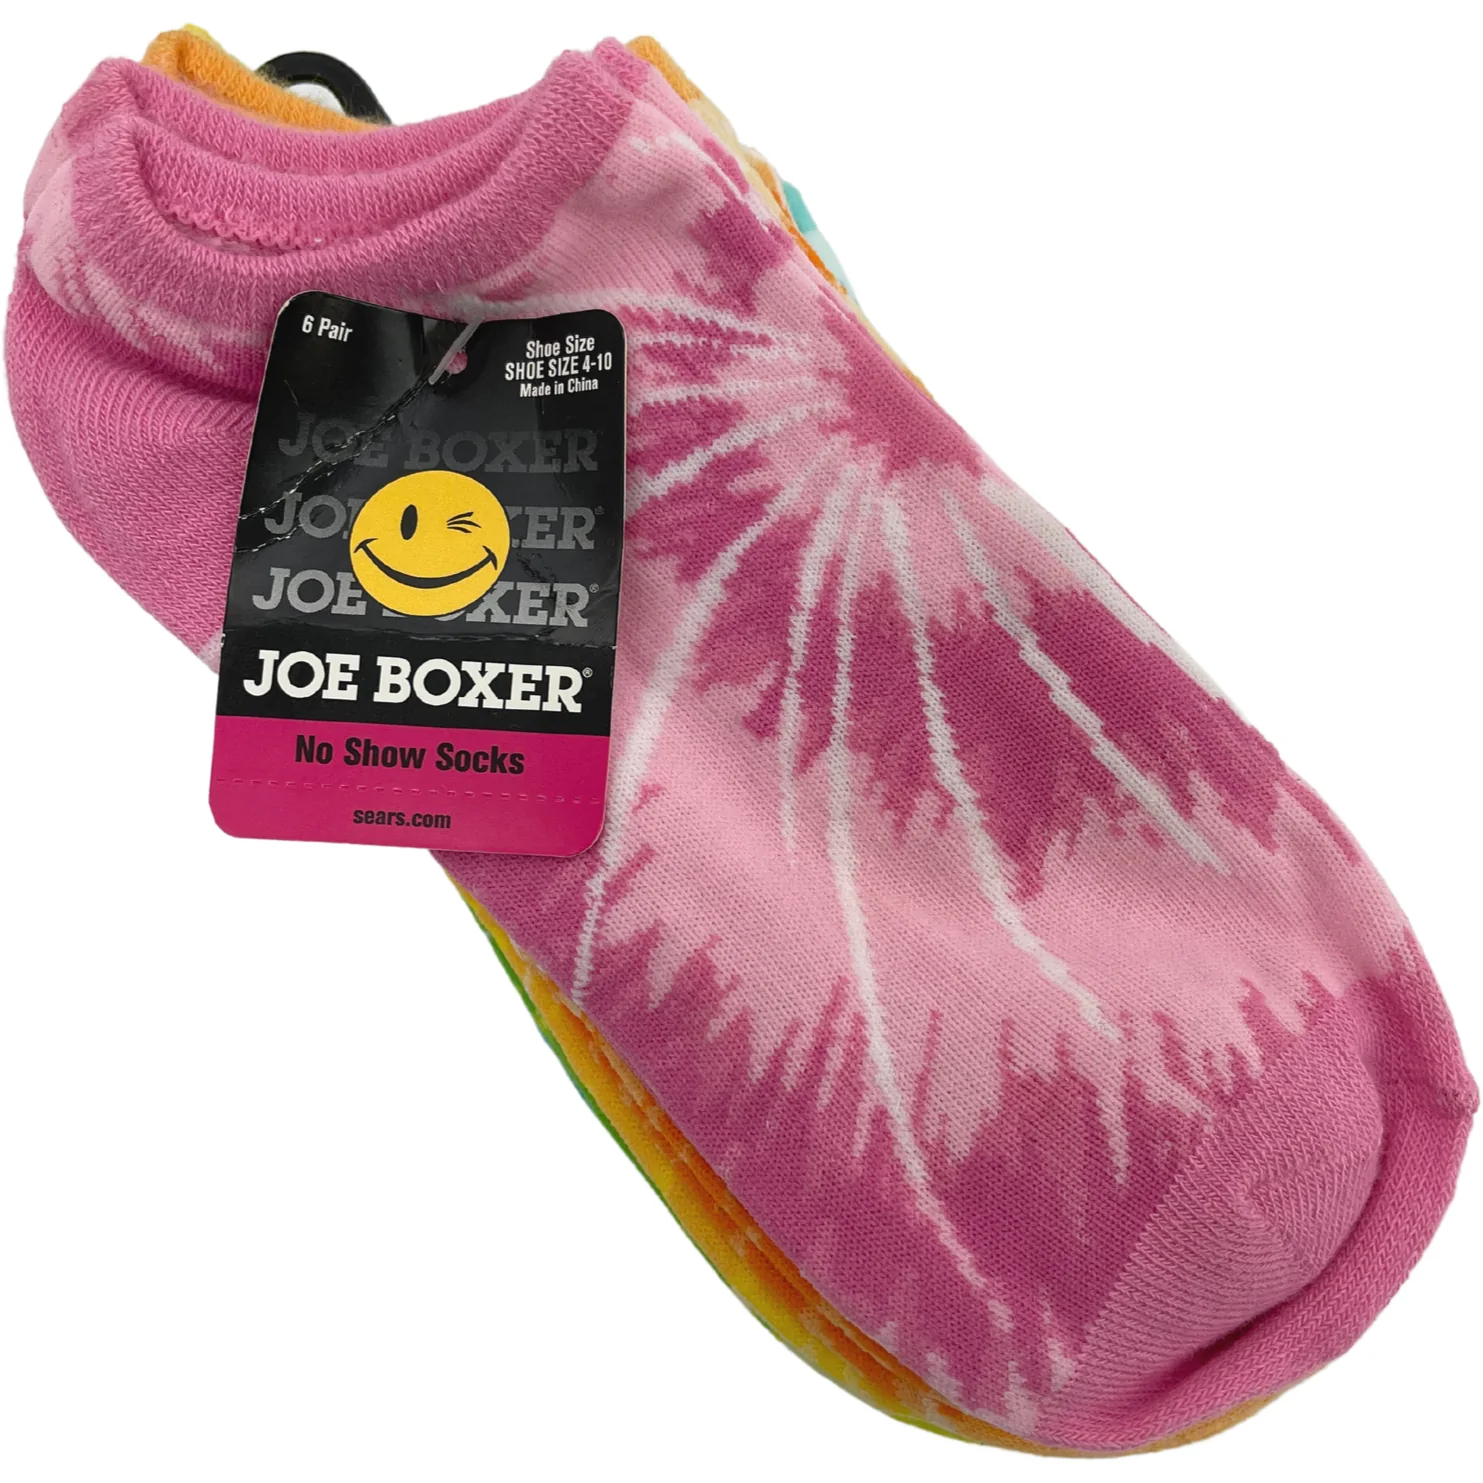 Joe Boxer Women's Socks / No Show Socks / 6 Pairs / Tie-Dye Pattern / MultiColour Pack / Shoe Size 4-10